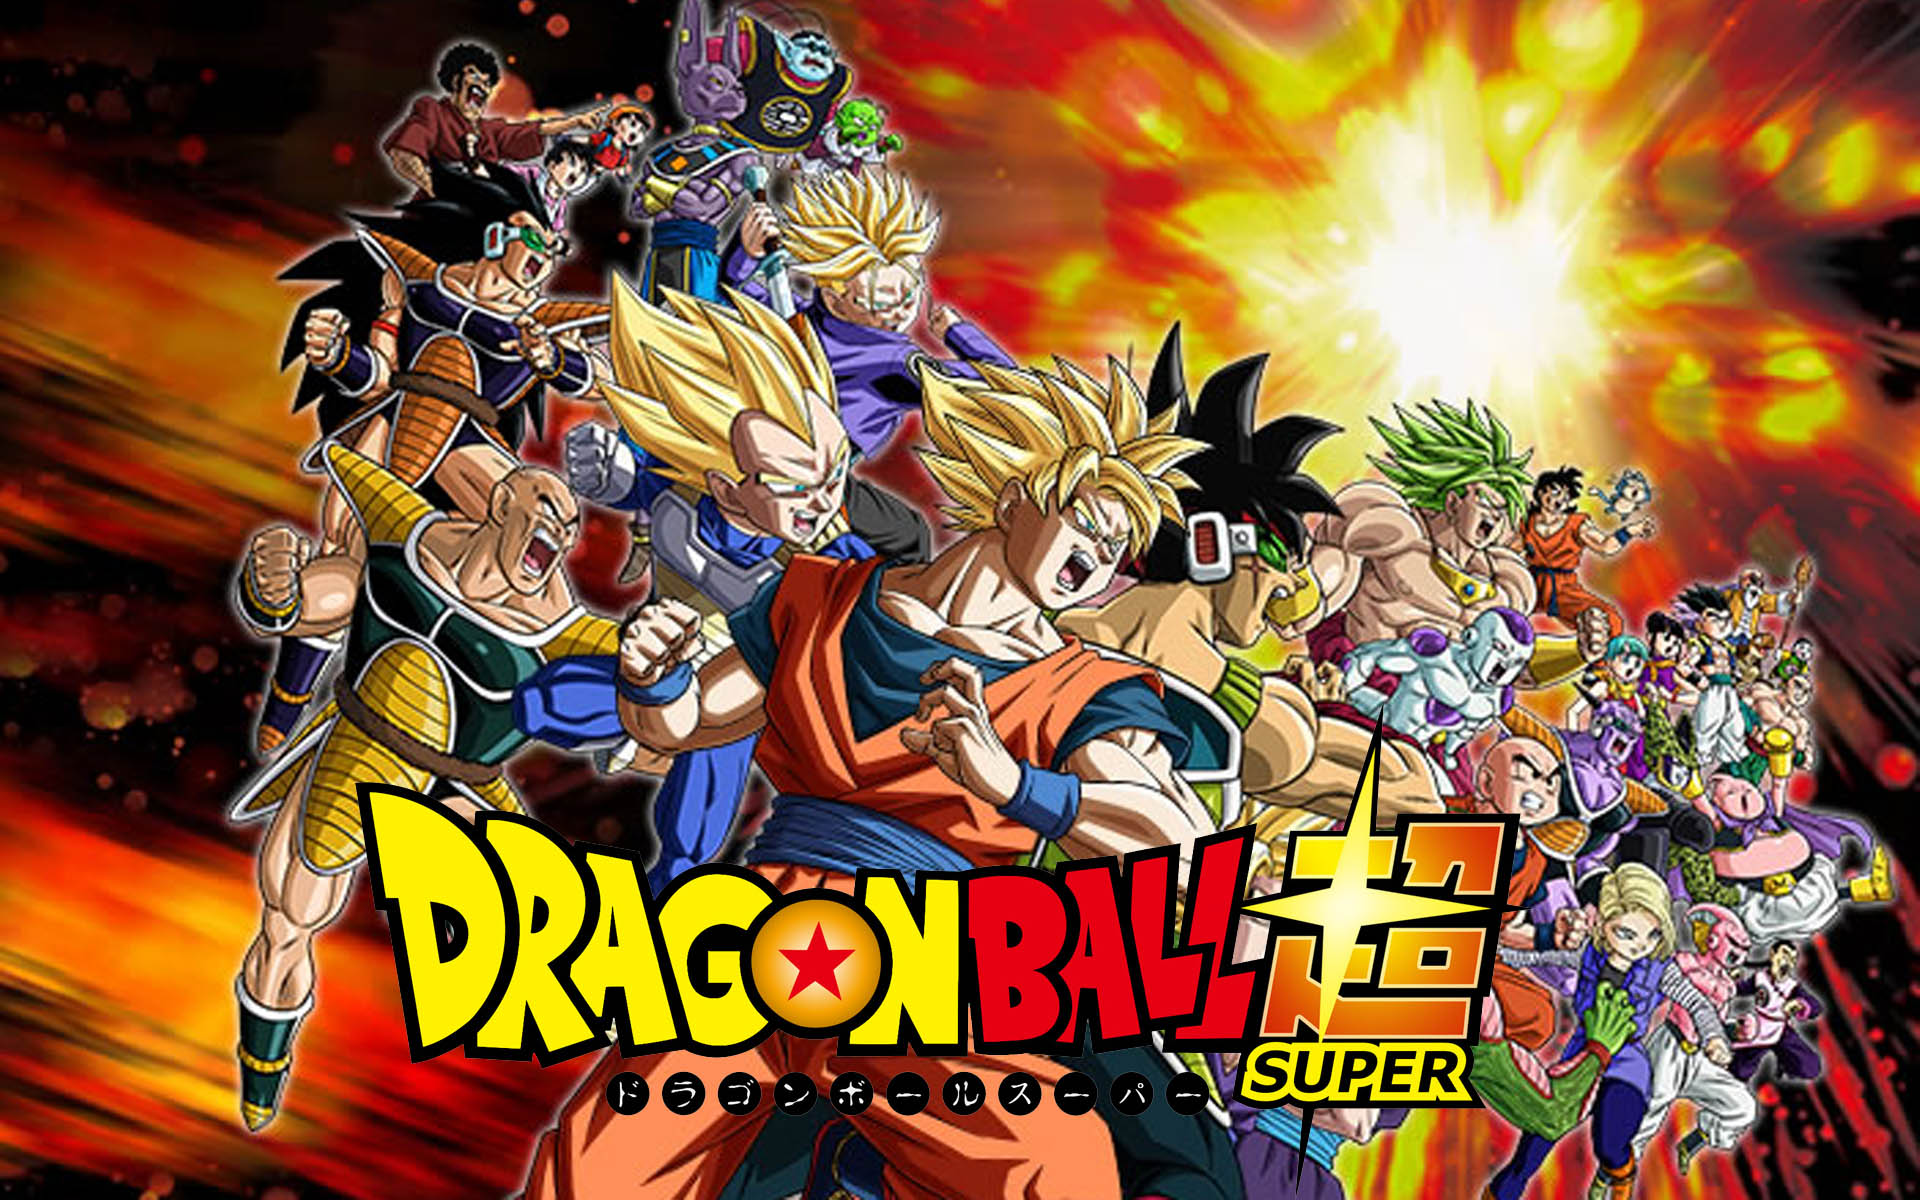 Dragon Ball Super #9